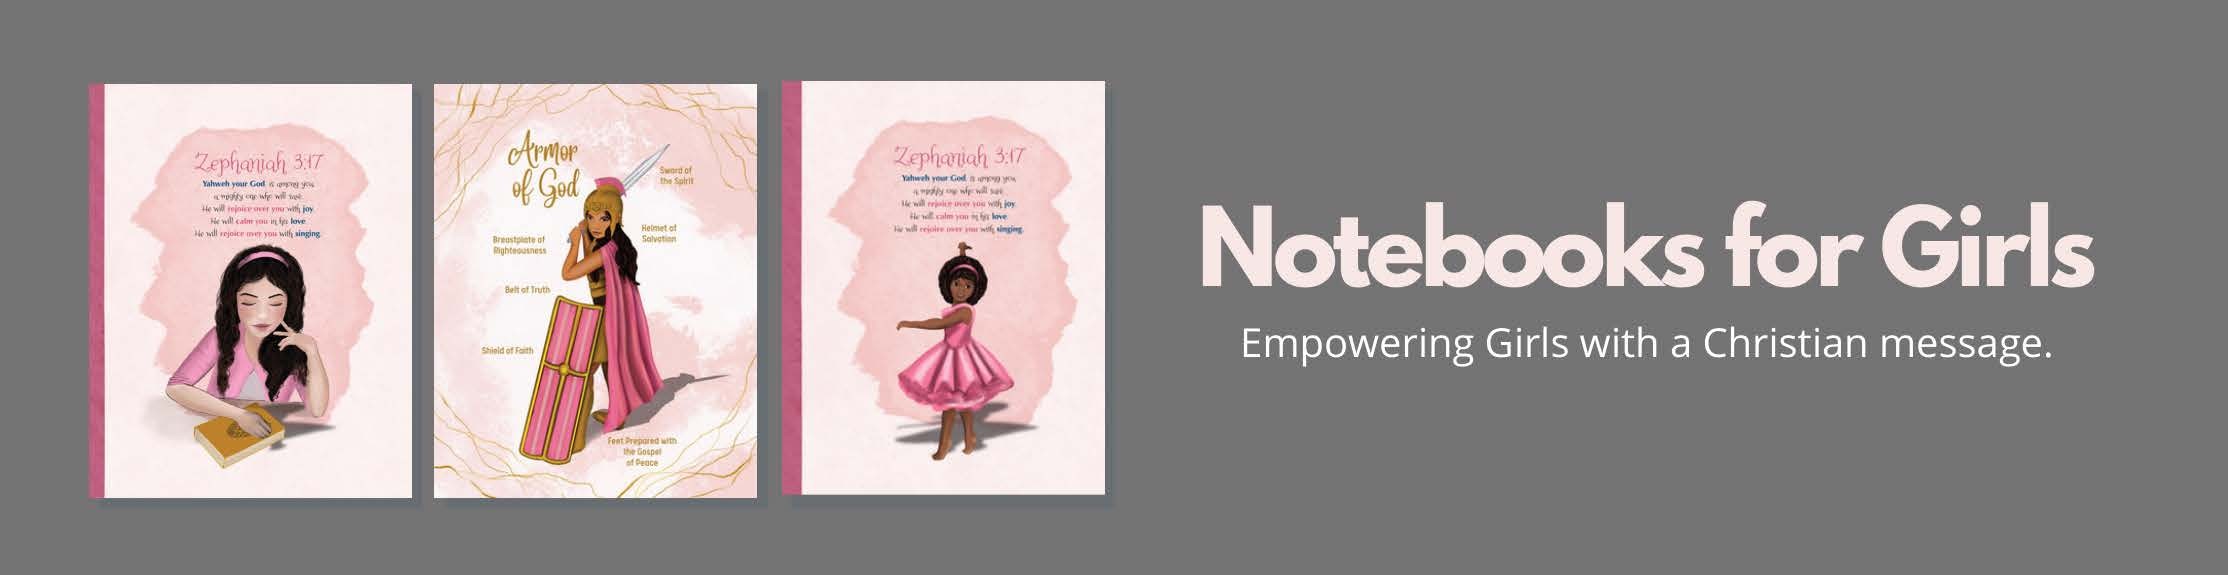 Christian Notebooks for Girls Image for ad